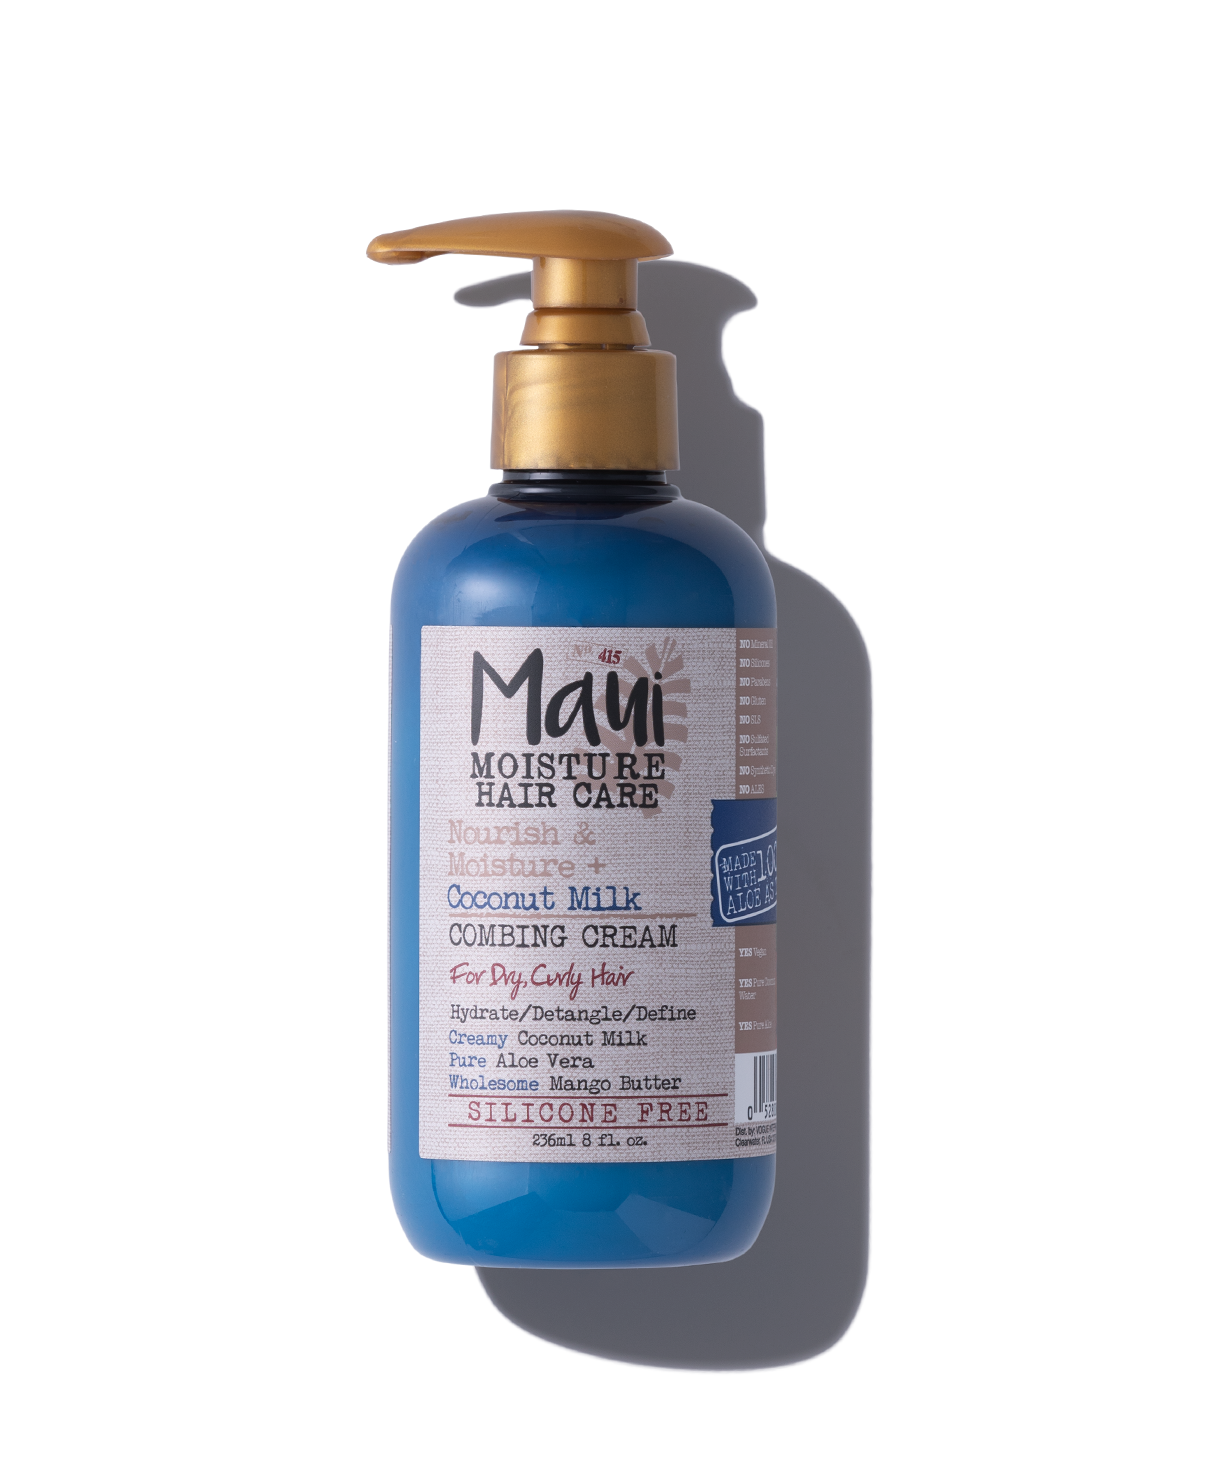 Nourish & Moisture + Coconut Milk Combing Cream - Maui Moisture